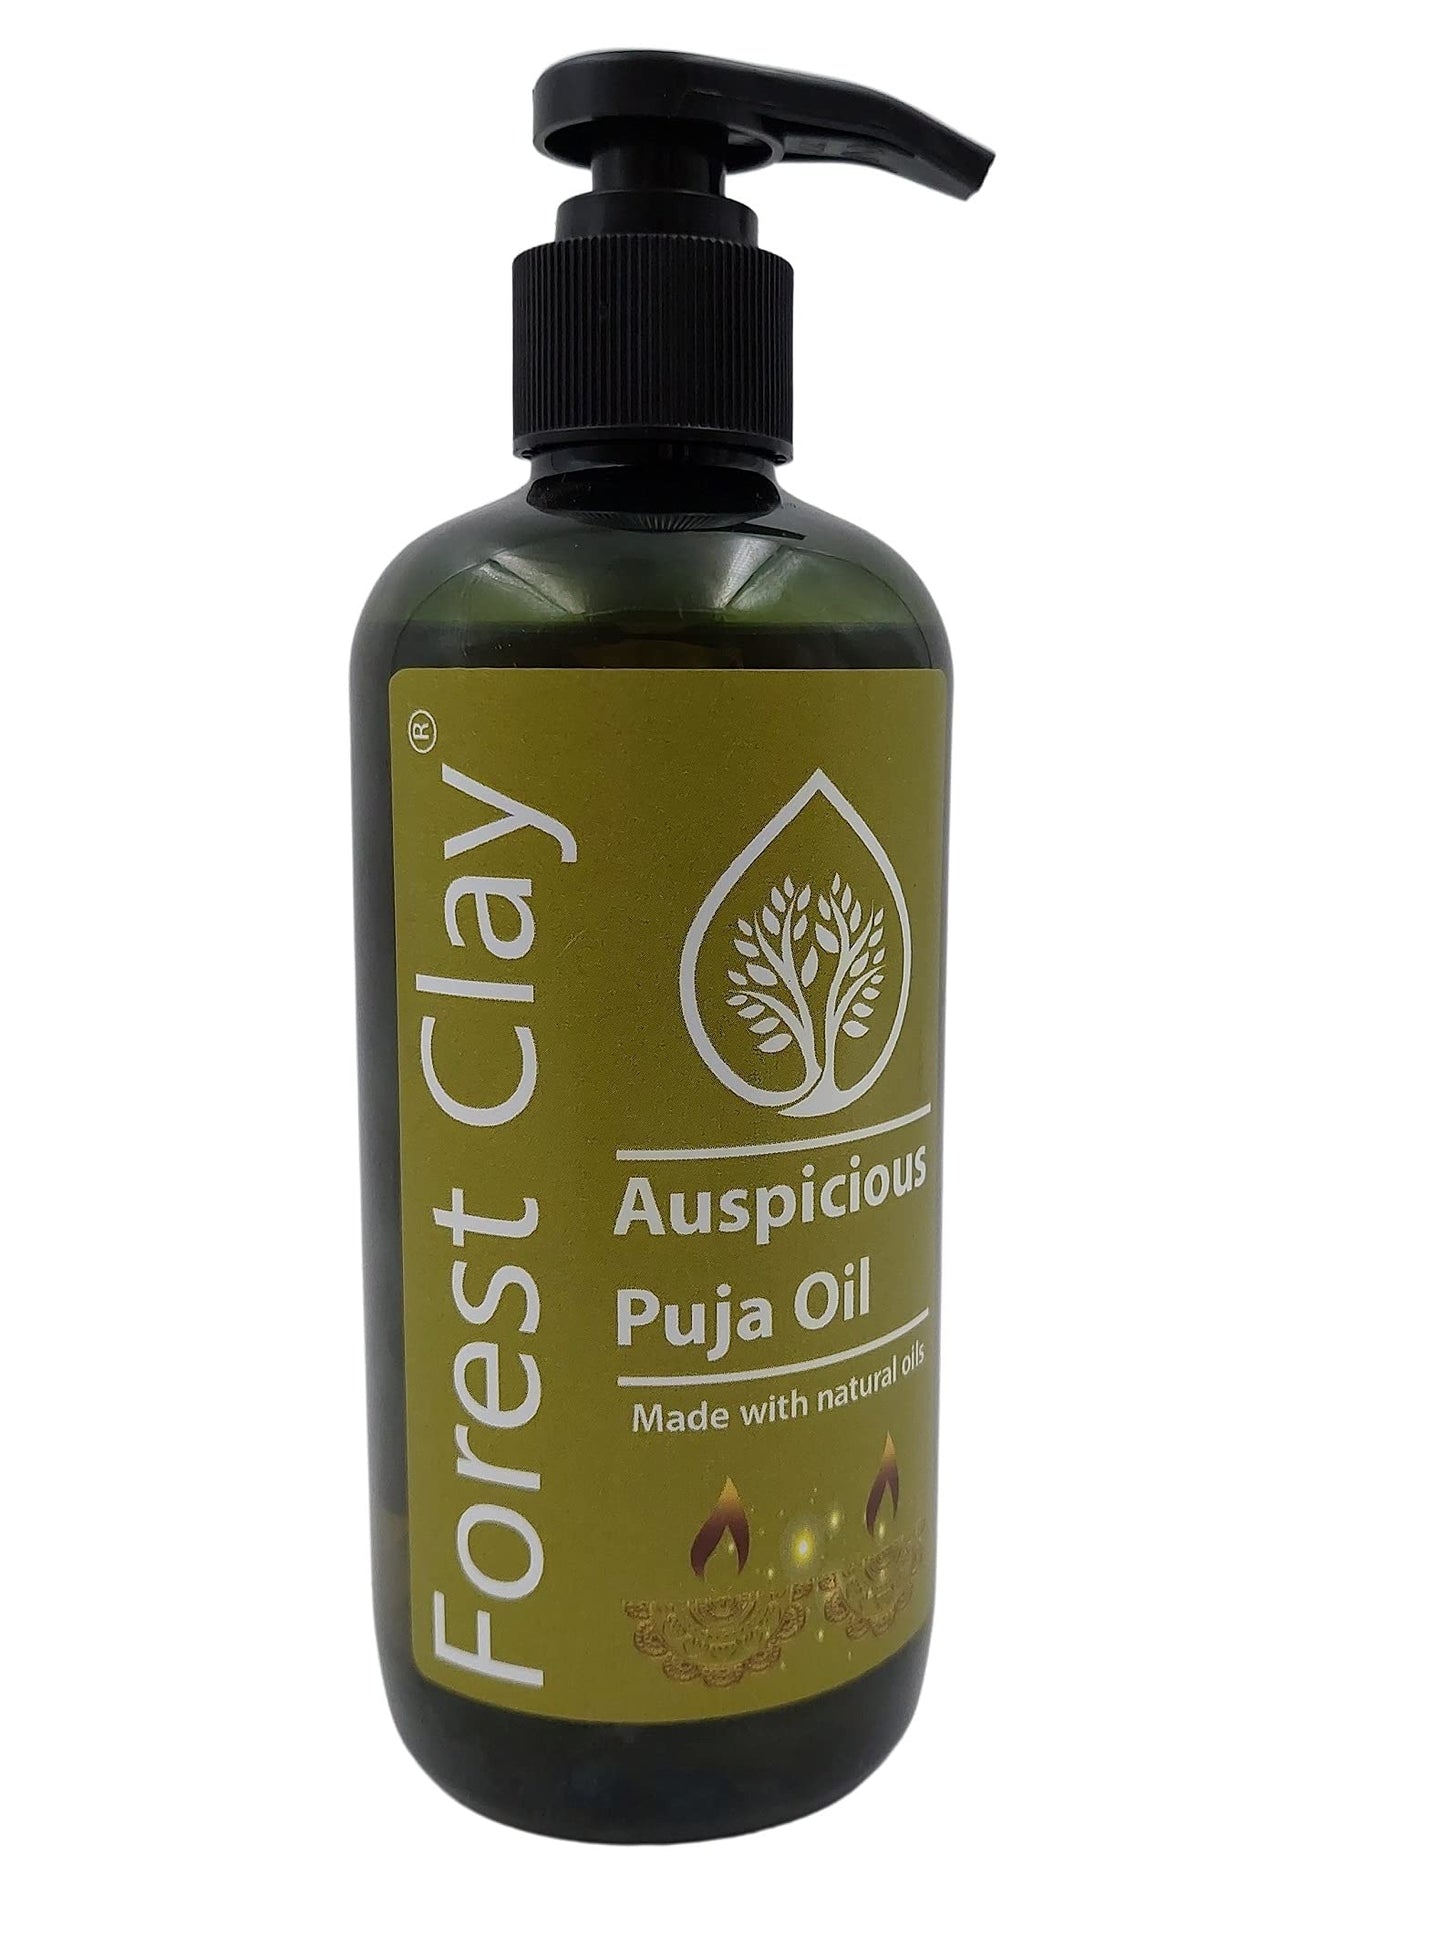 Forest Clay Auspicious Puja Oil 300 ml Bottle With Dispenser Pump